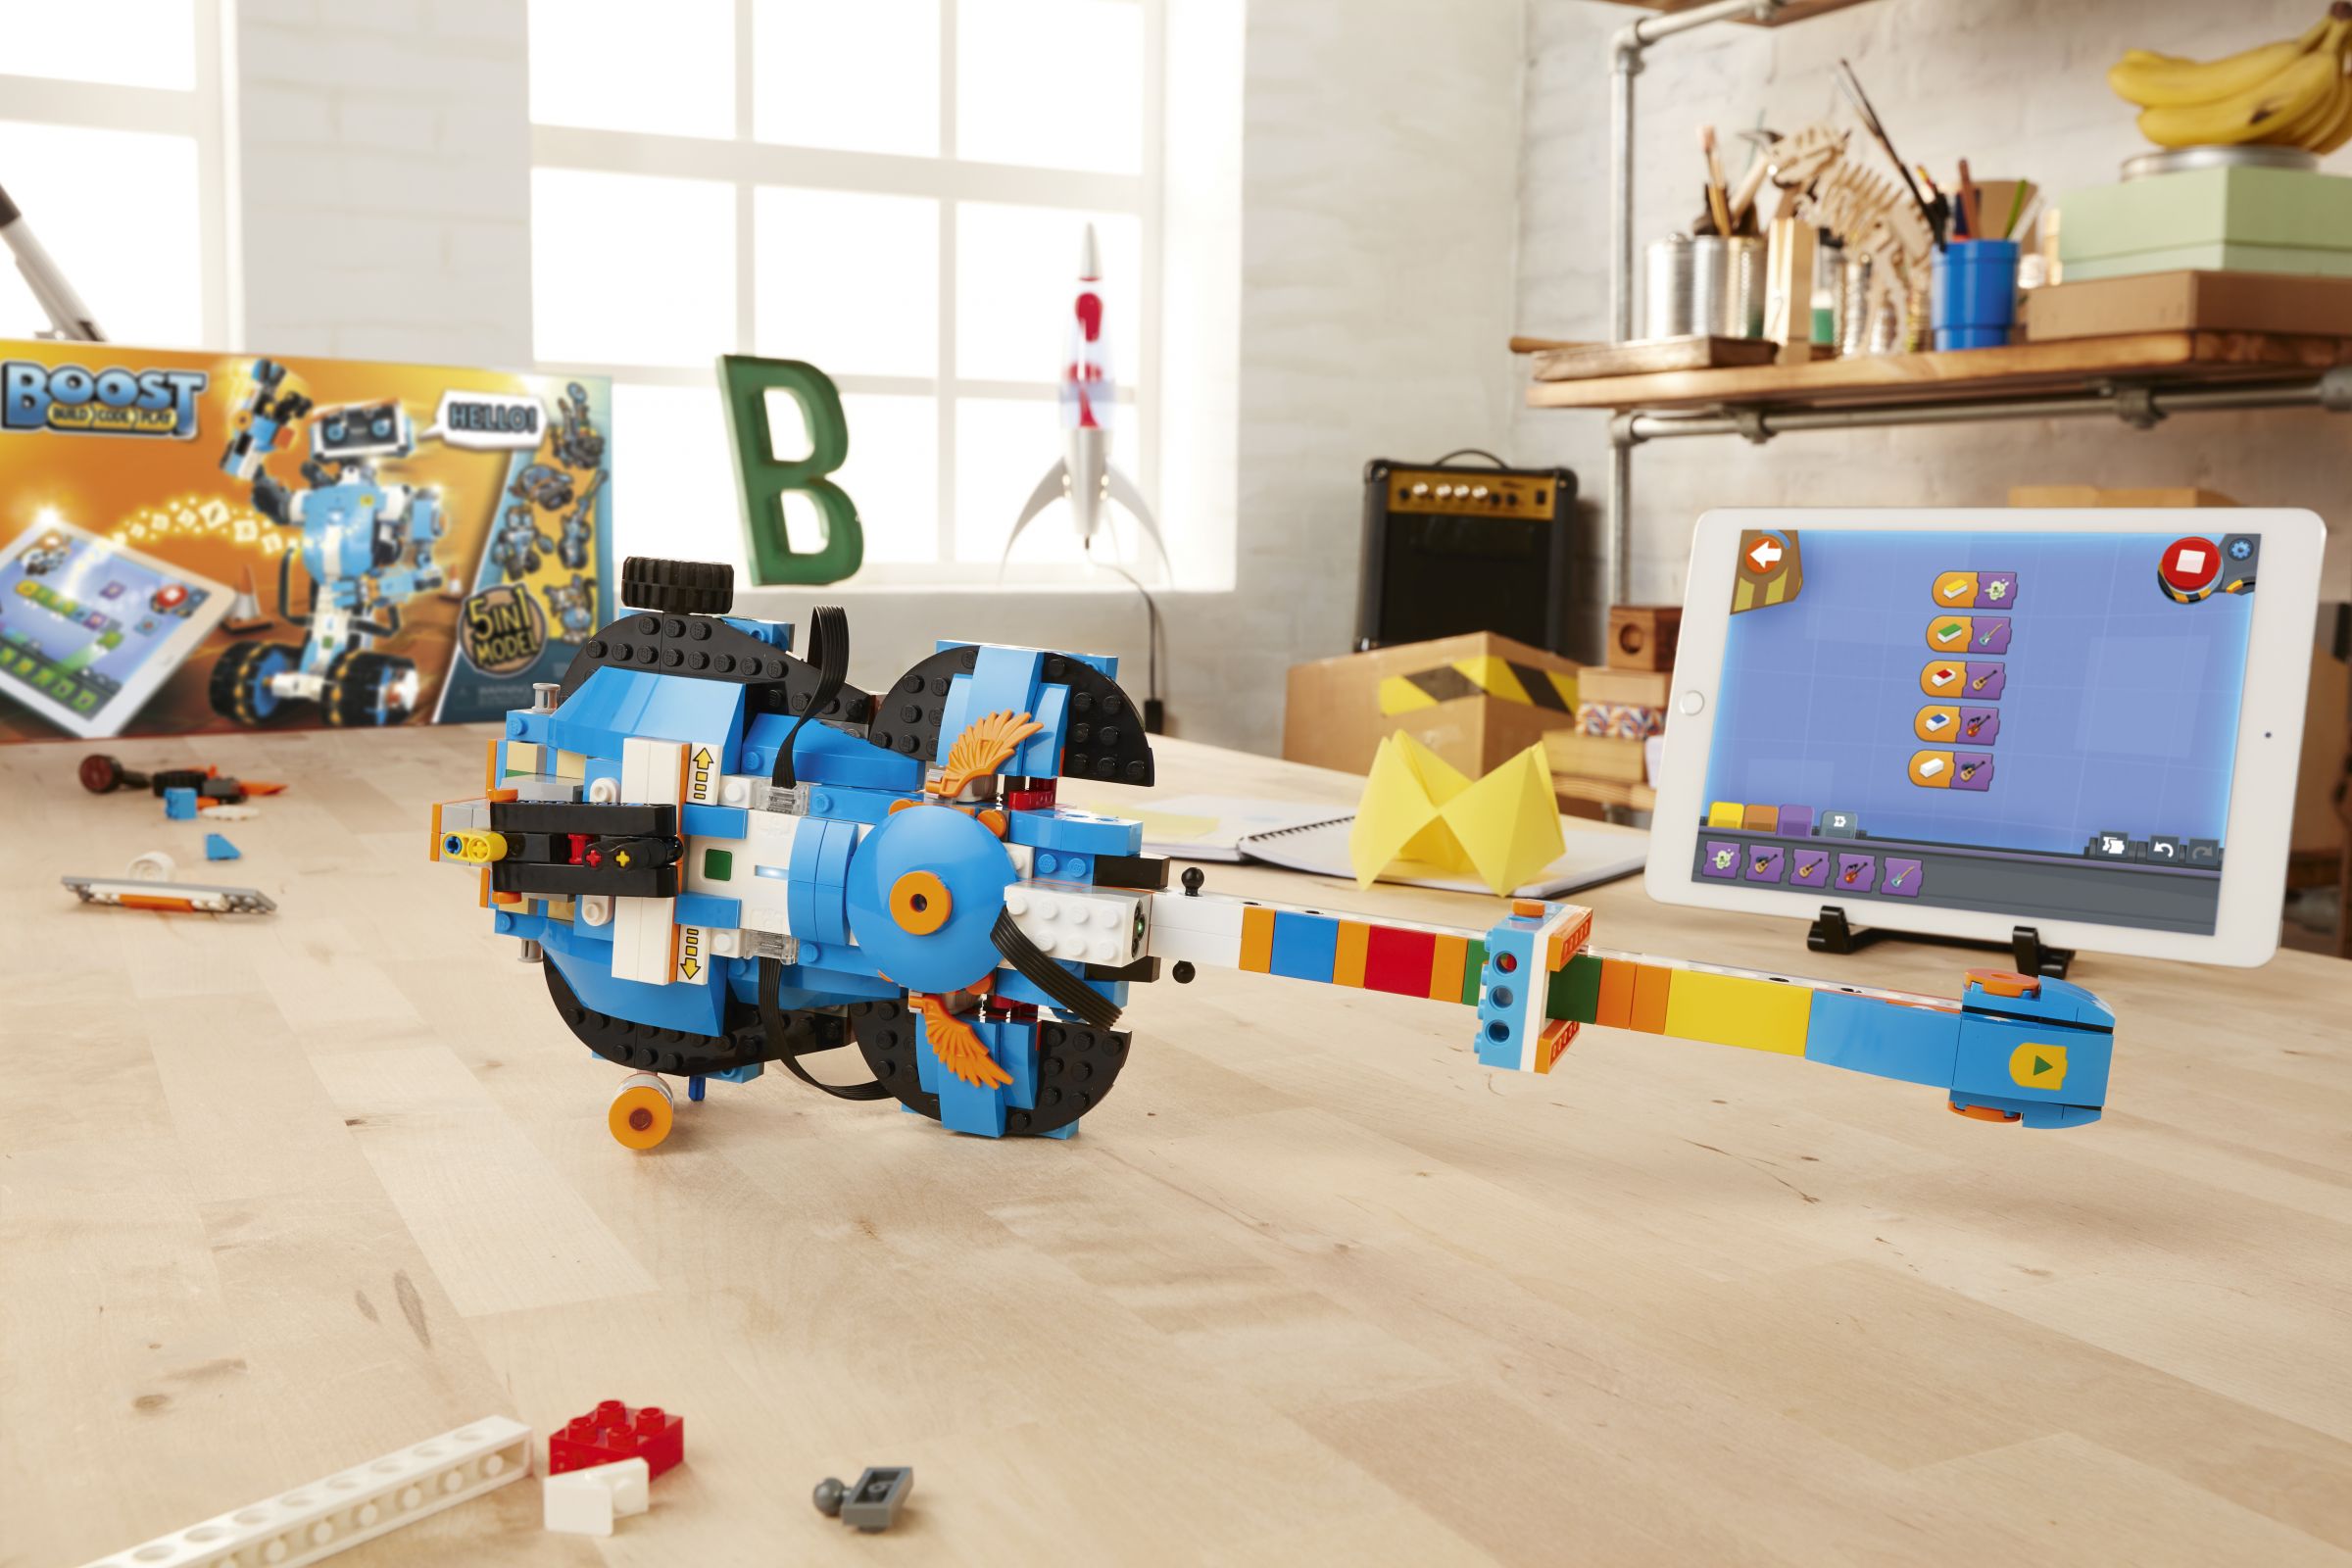 LEGO BOOST 17101 Programmierbares Roboticset LEGO_BOOST_GUITAR_ALONE_V058 2.jpg